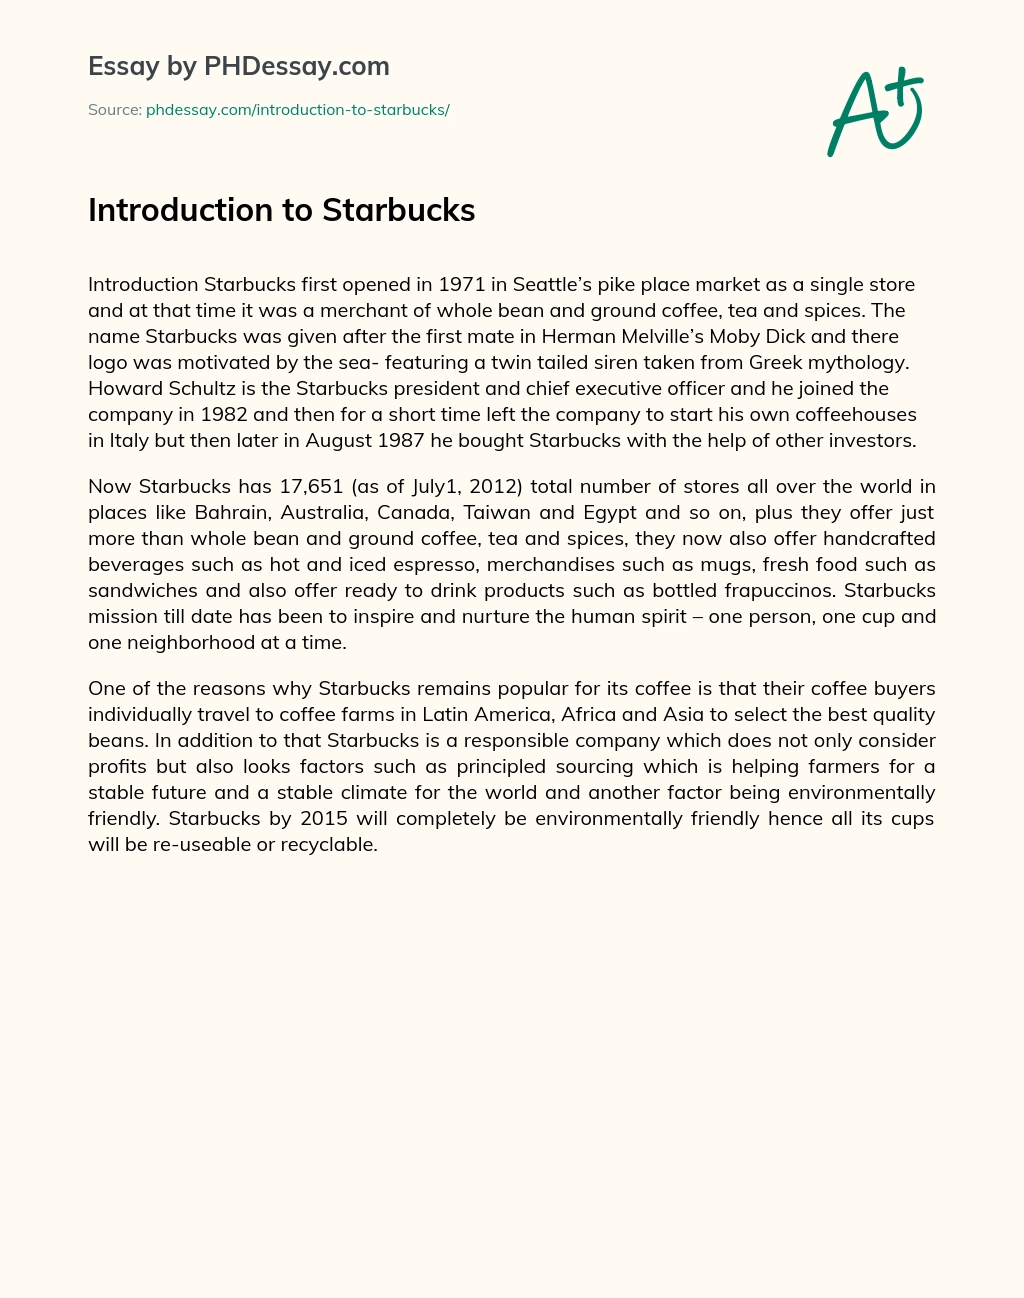 Introduction to Starbucks essay